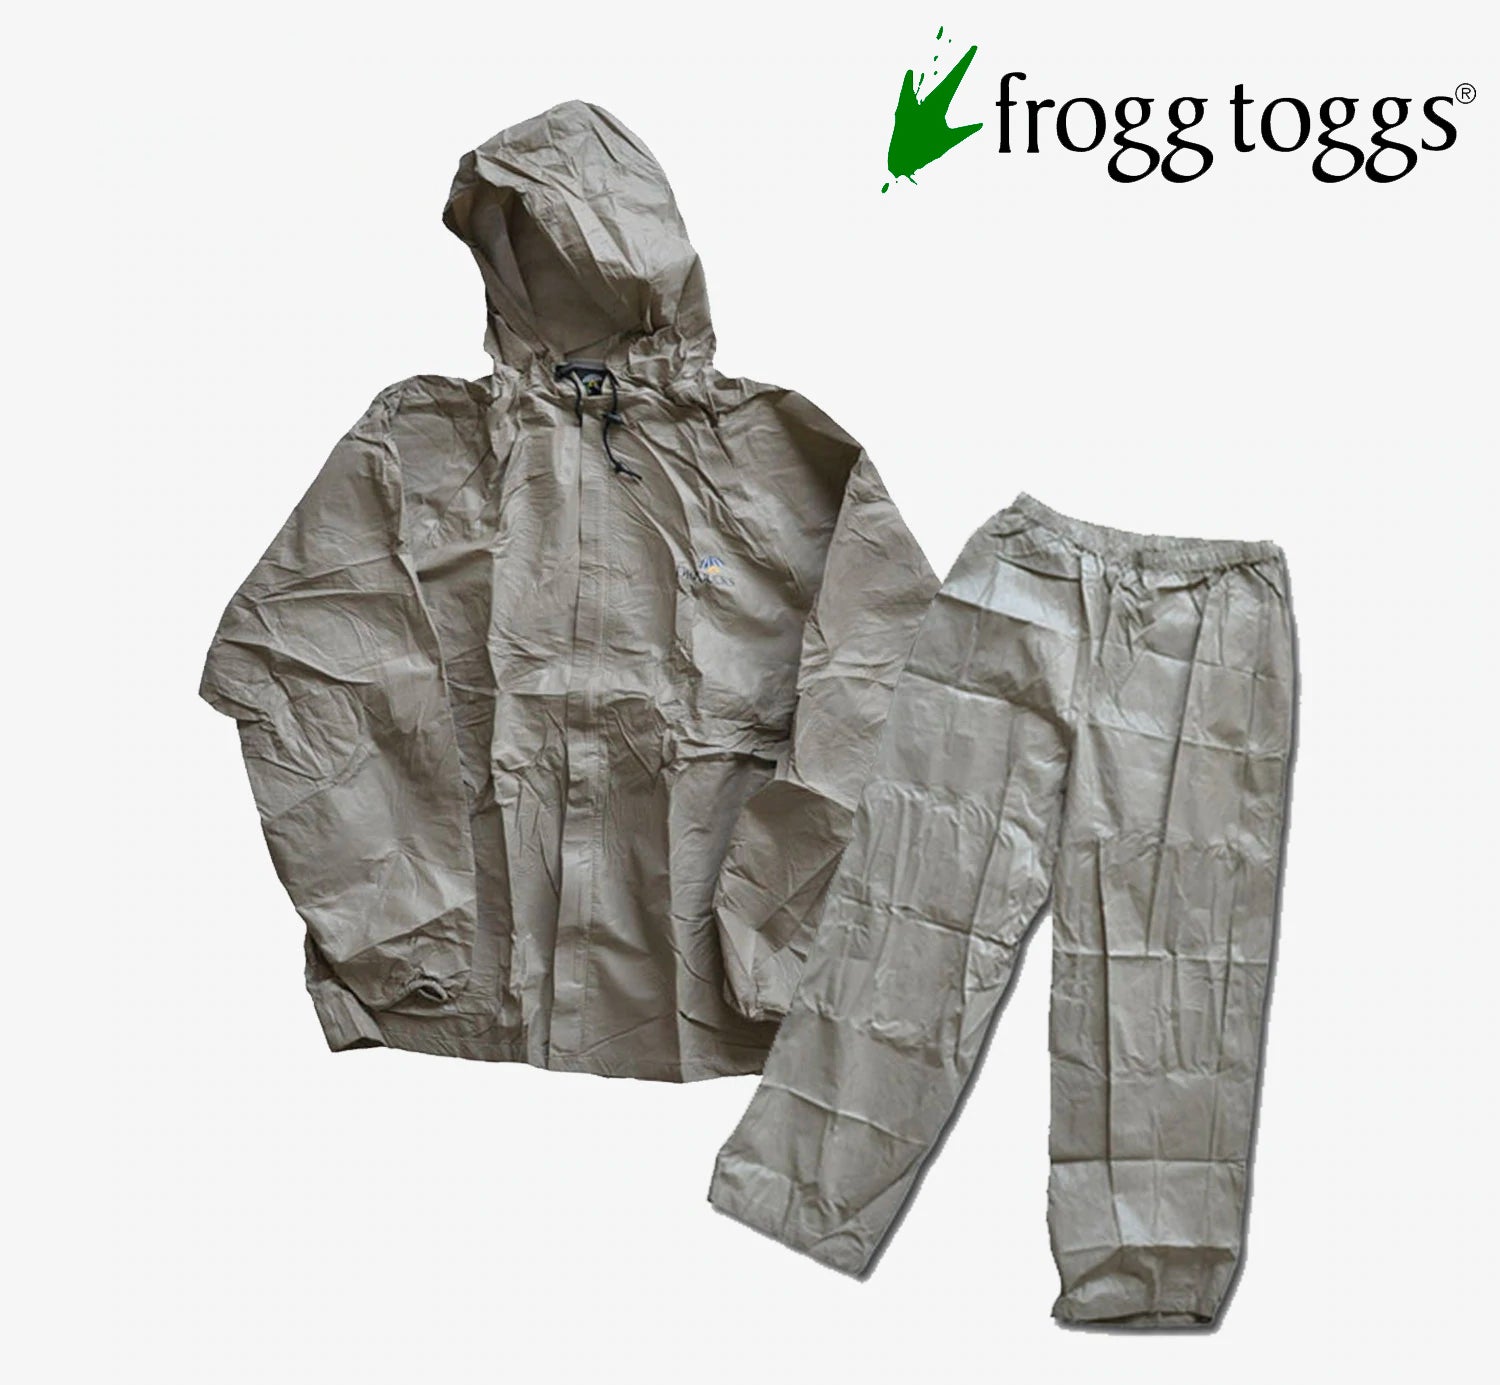 Frogg toggs / Basic Rain Suit